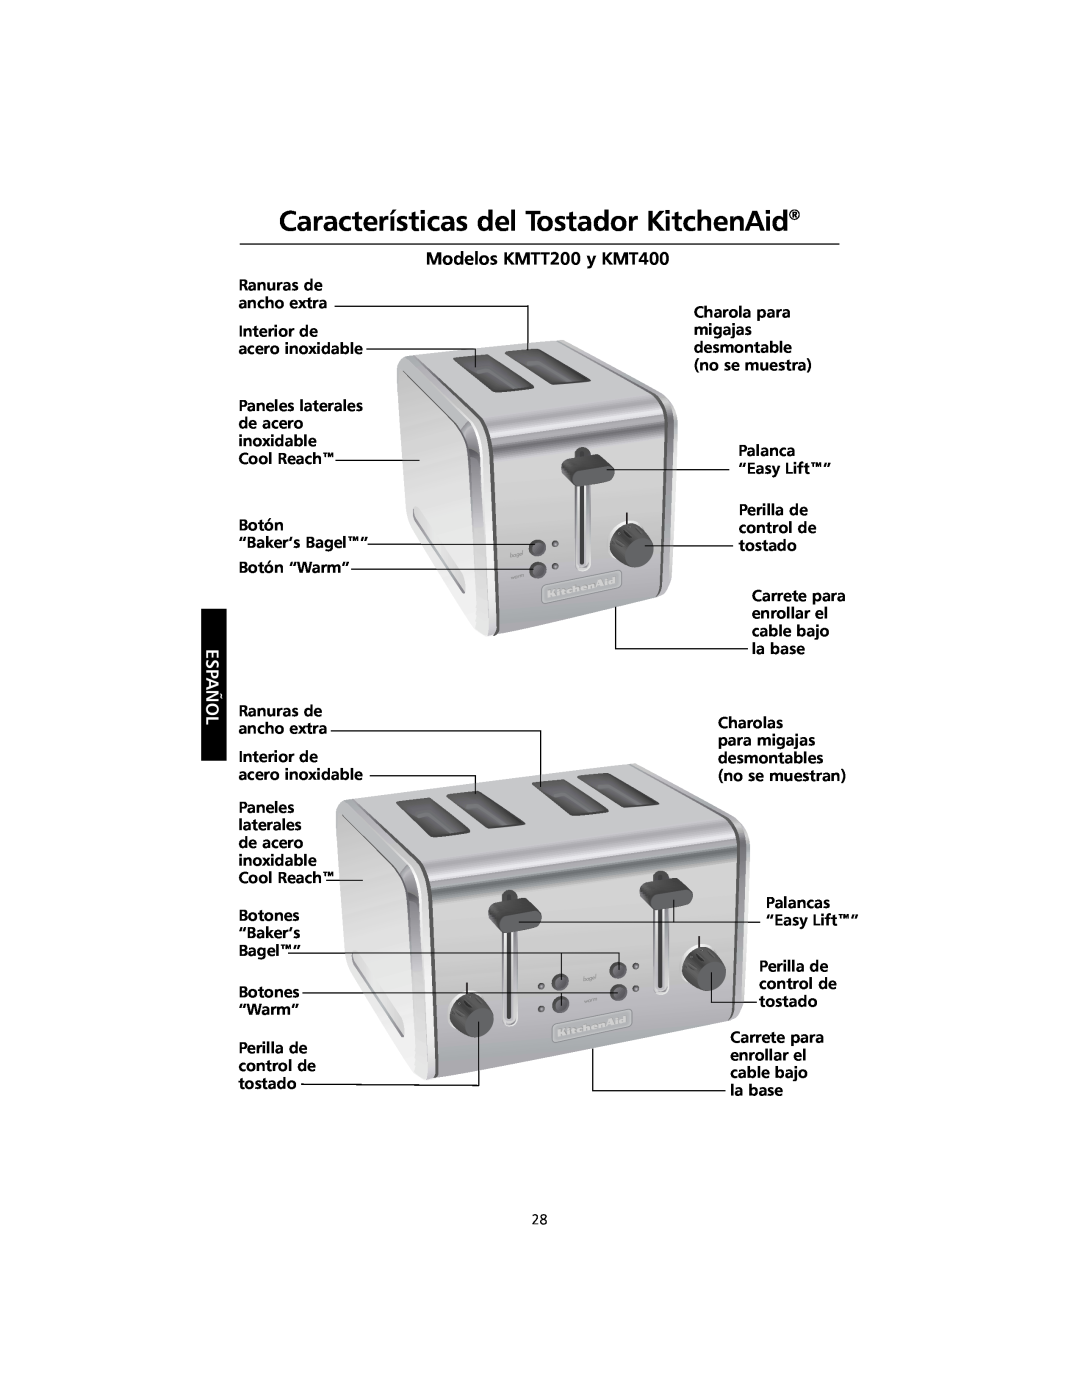 KitchenAid KMTT400 manual Características del Tostador KitchenAid, Modelos KMTT200 y KMT400 